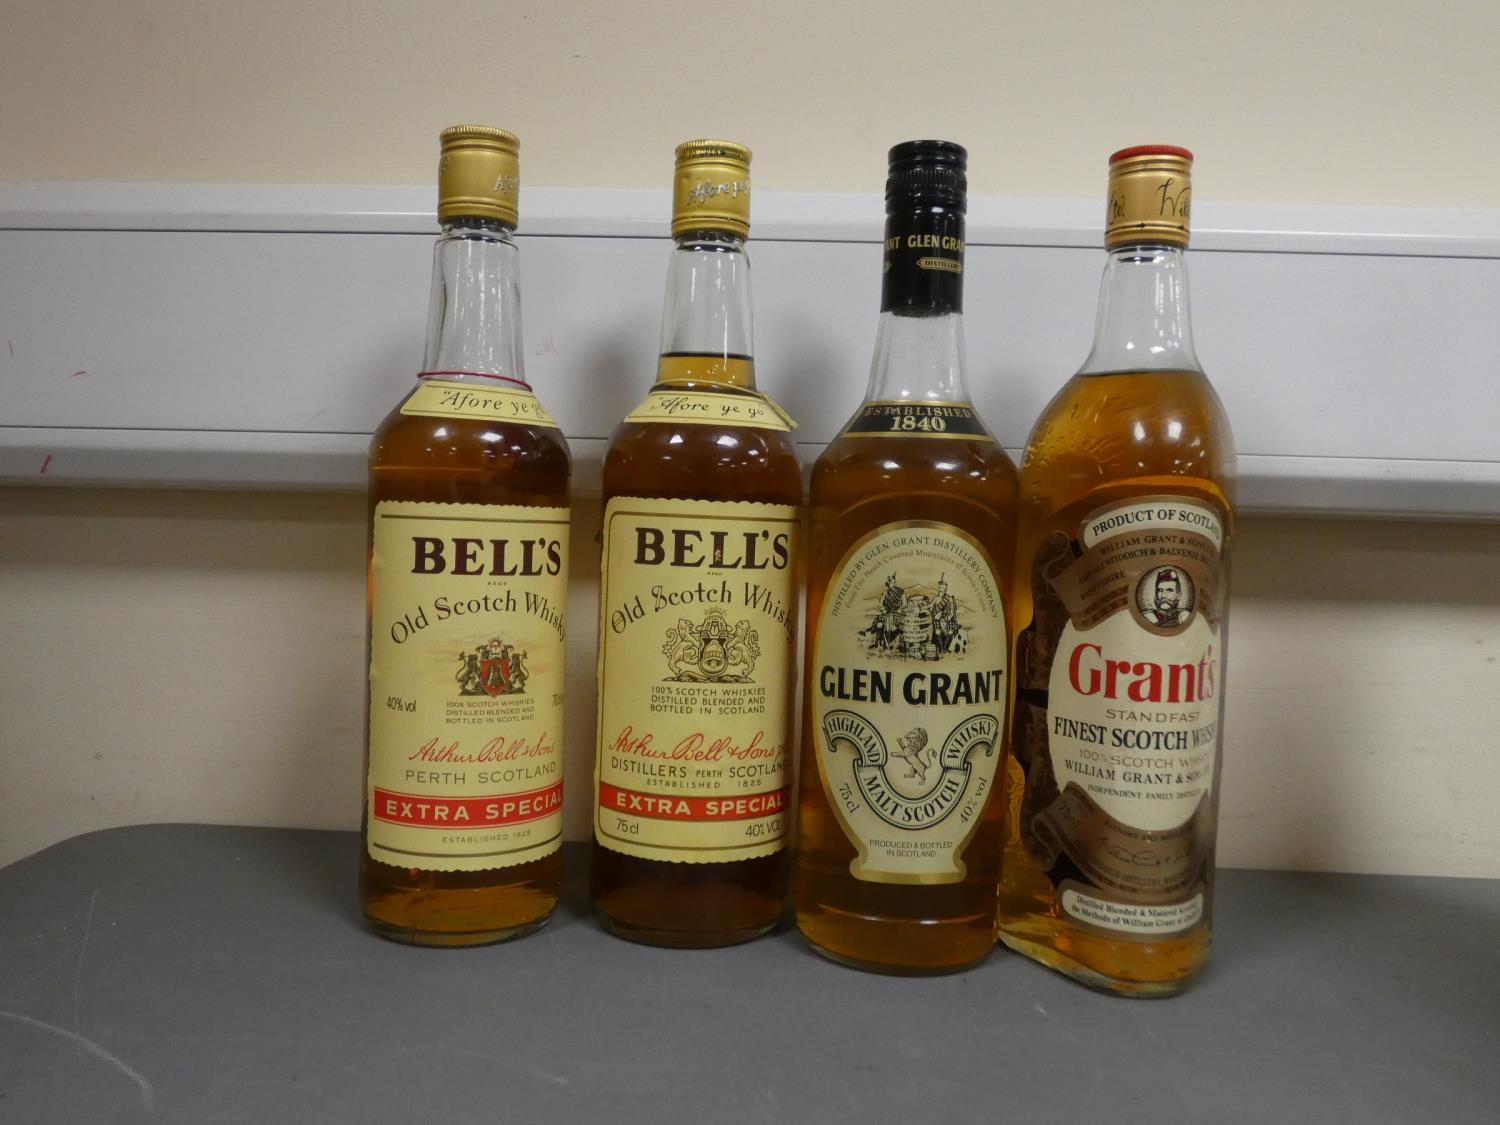 Glen Grant highland malt Scotch whisky, Bottled circa 1980s, 75cl, 40% vol, with Grant's standfast